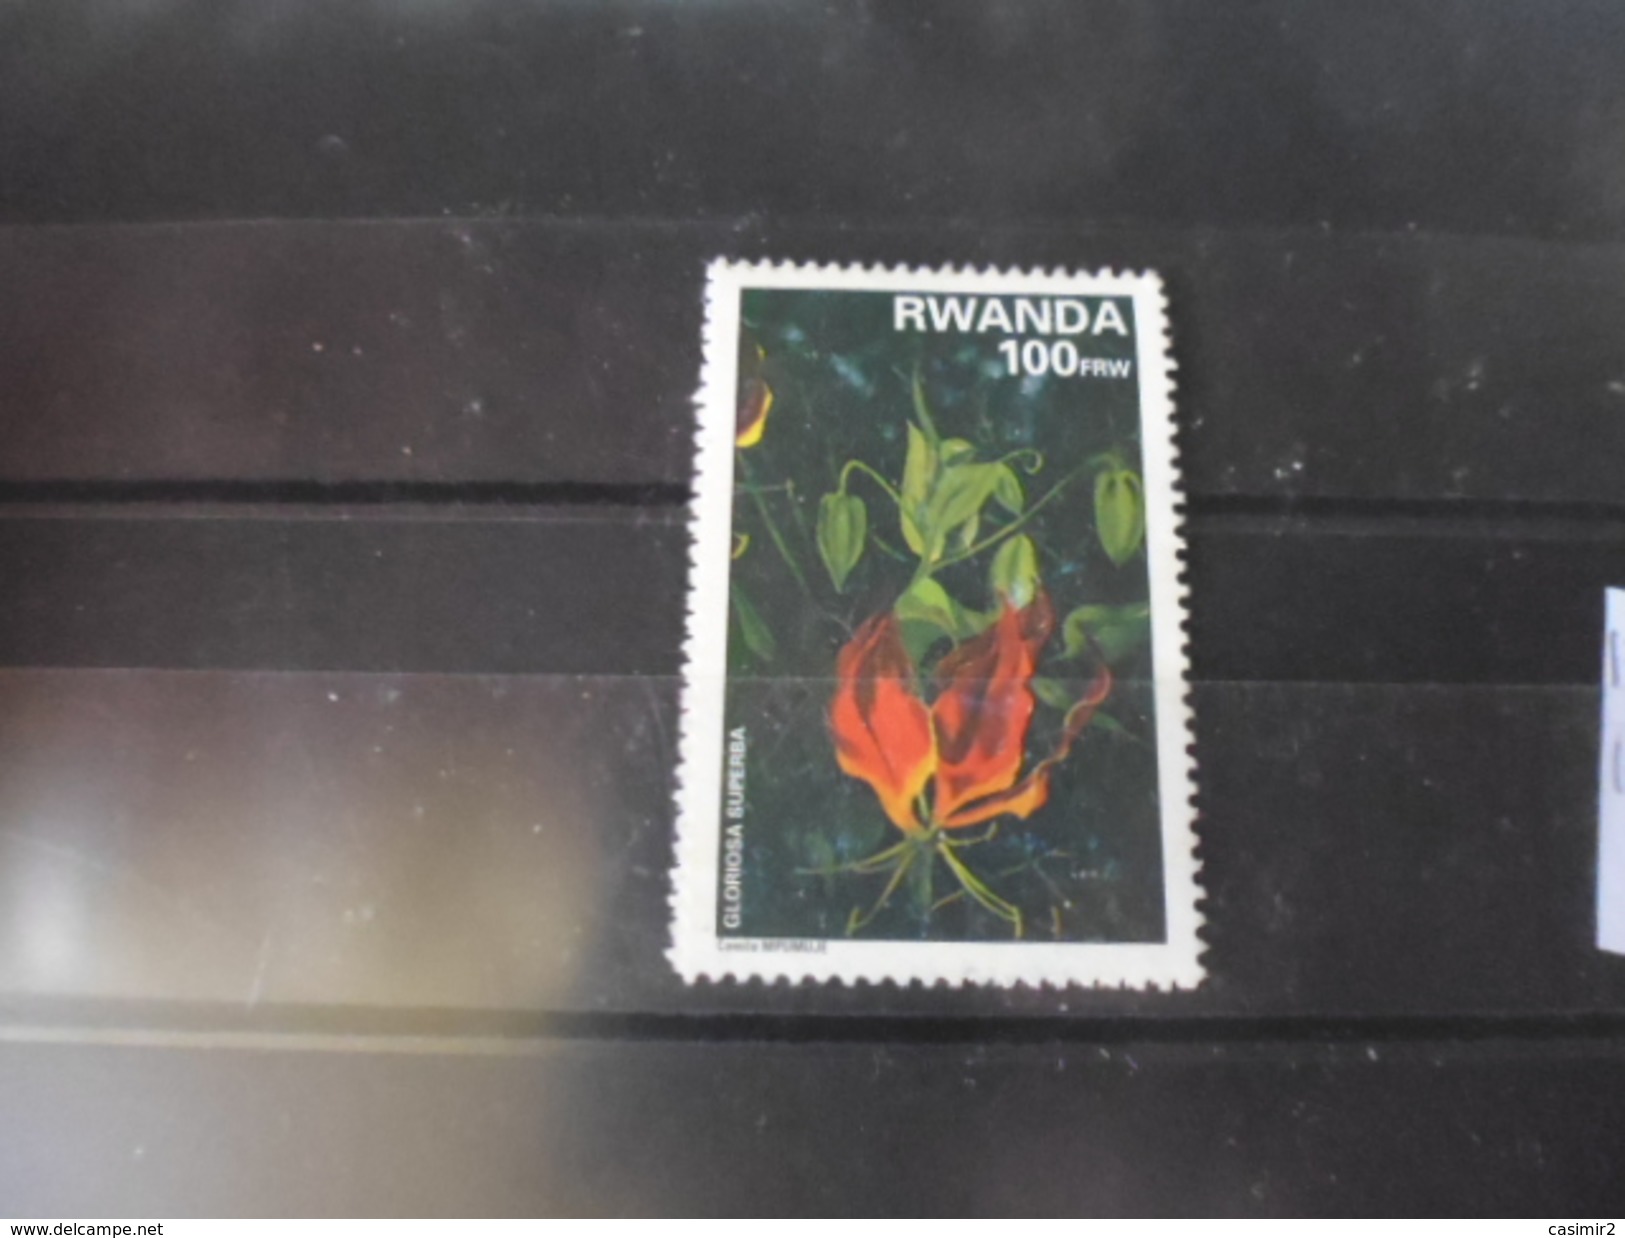 RWANDA TIMBRE  YVERT N° 1329 - Used Stamps